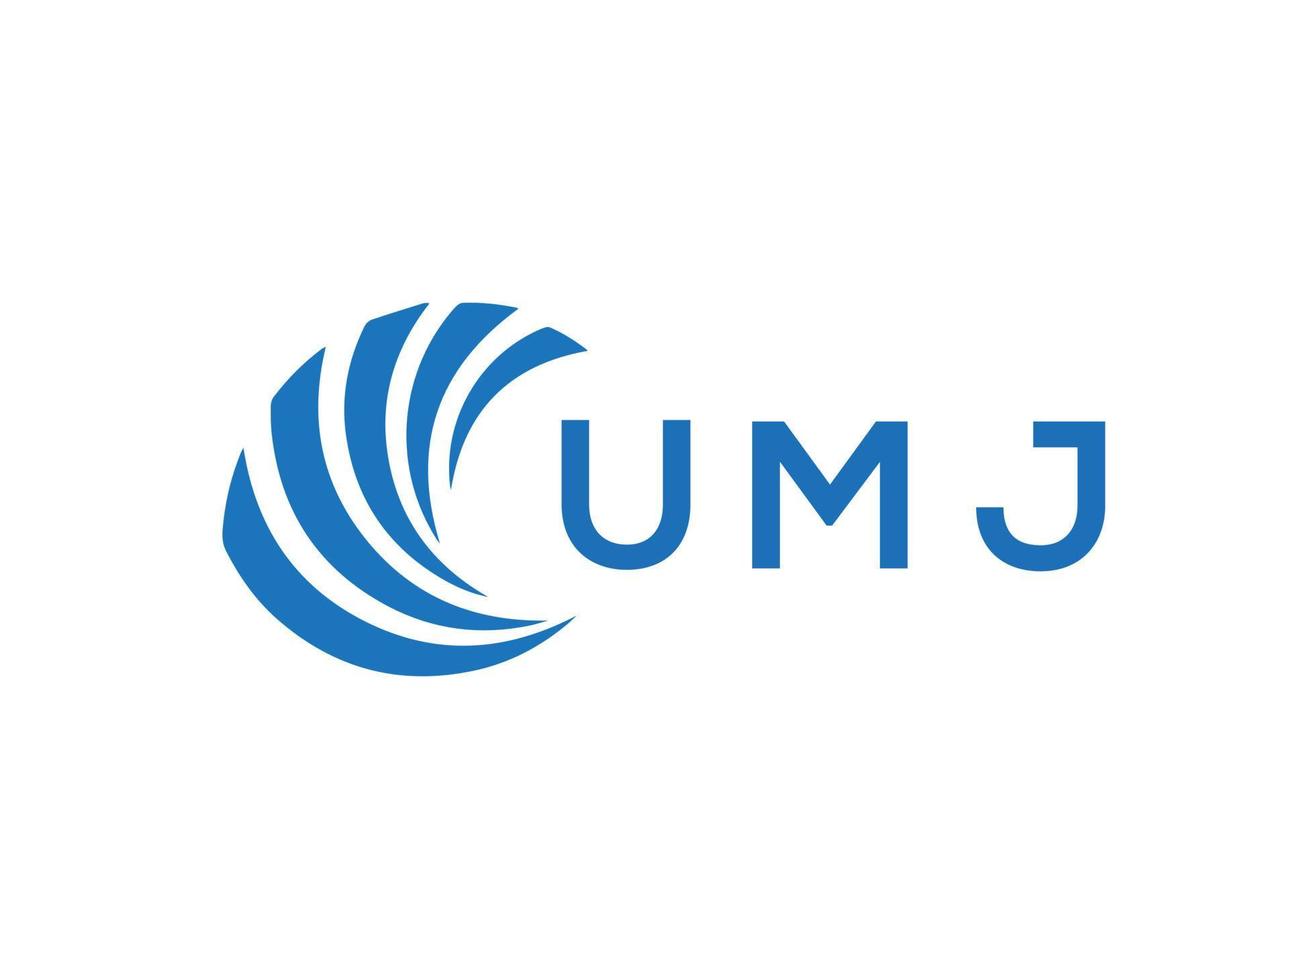 umj lettera logo design su bianca sfondo. umj creativo cerchio lettera logo concetto. umj lettera design. vettore